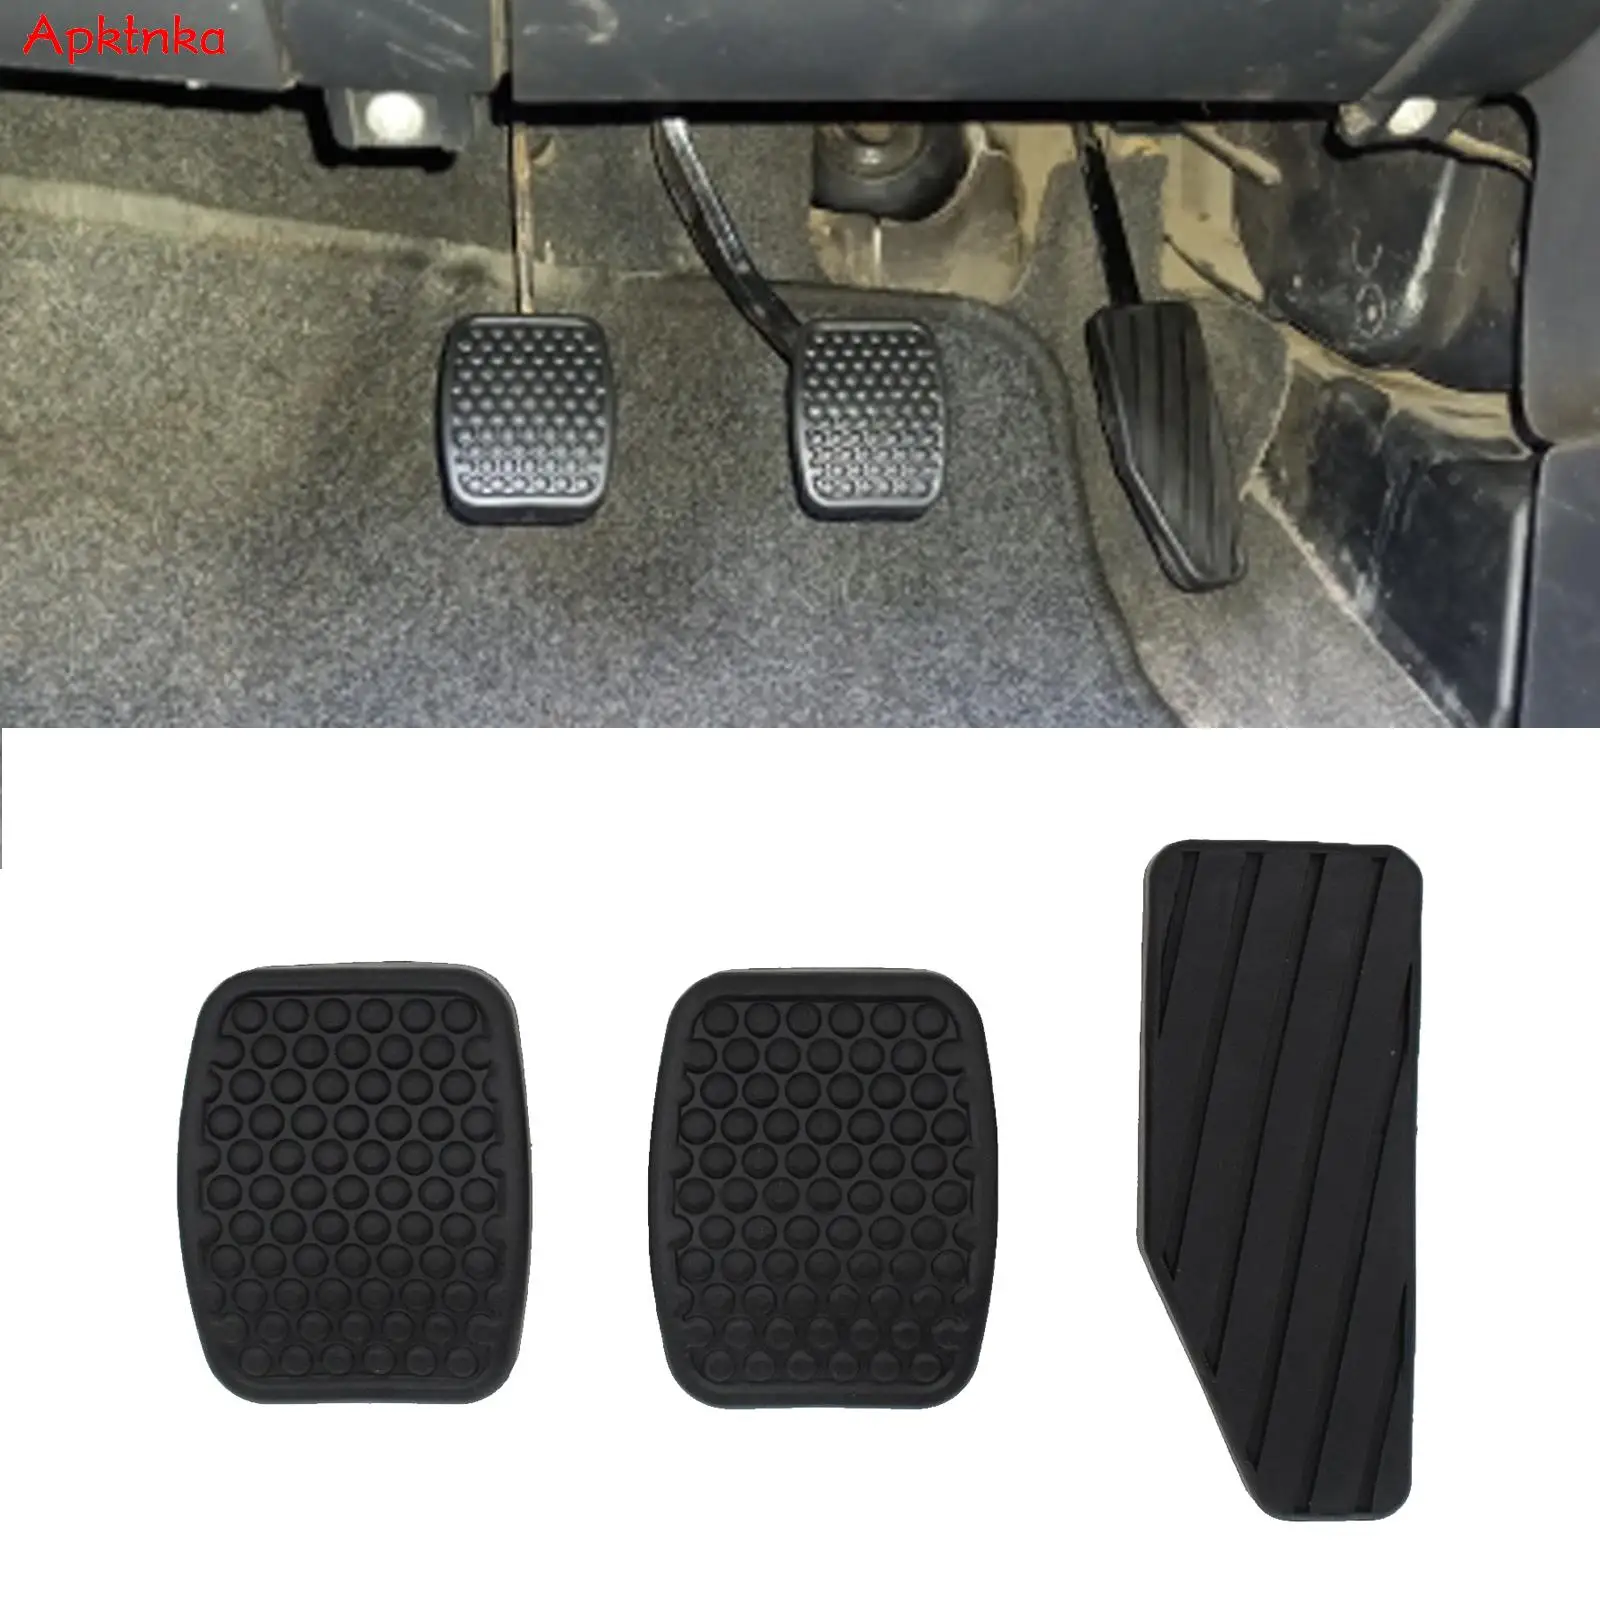 3Pcs/ Set Car Brake Clutch Accelerator Pedal Rubber Pad Cover For Suzuki Swift Samurai Sidekick Vitara Tracker OE# 49751-79001-animated-img